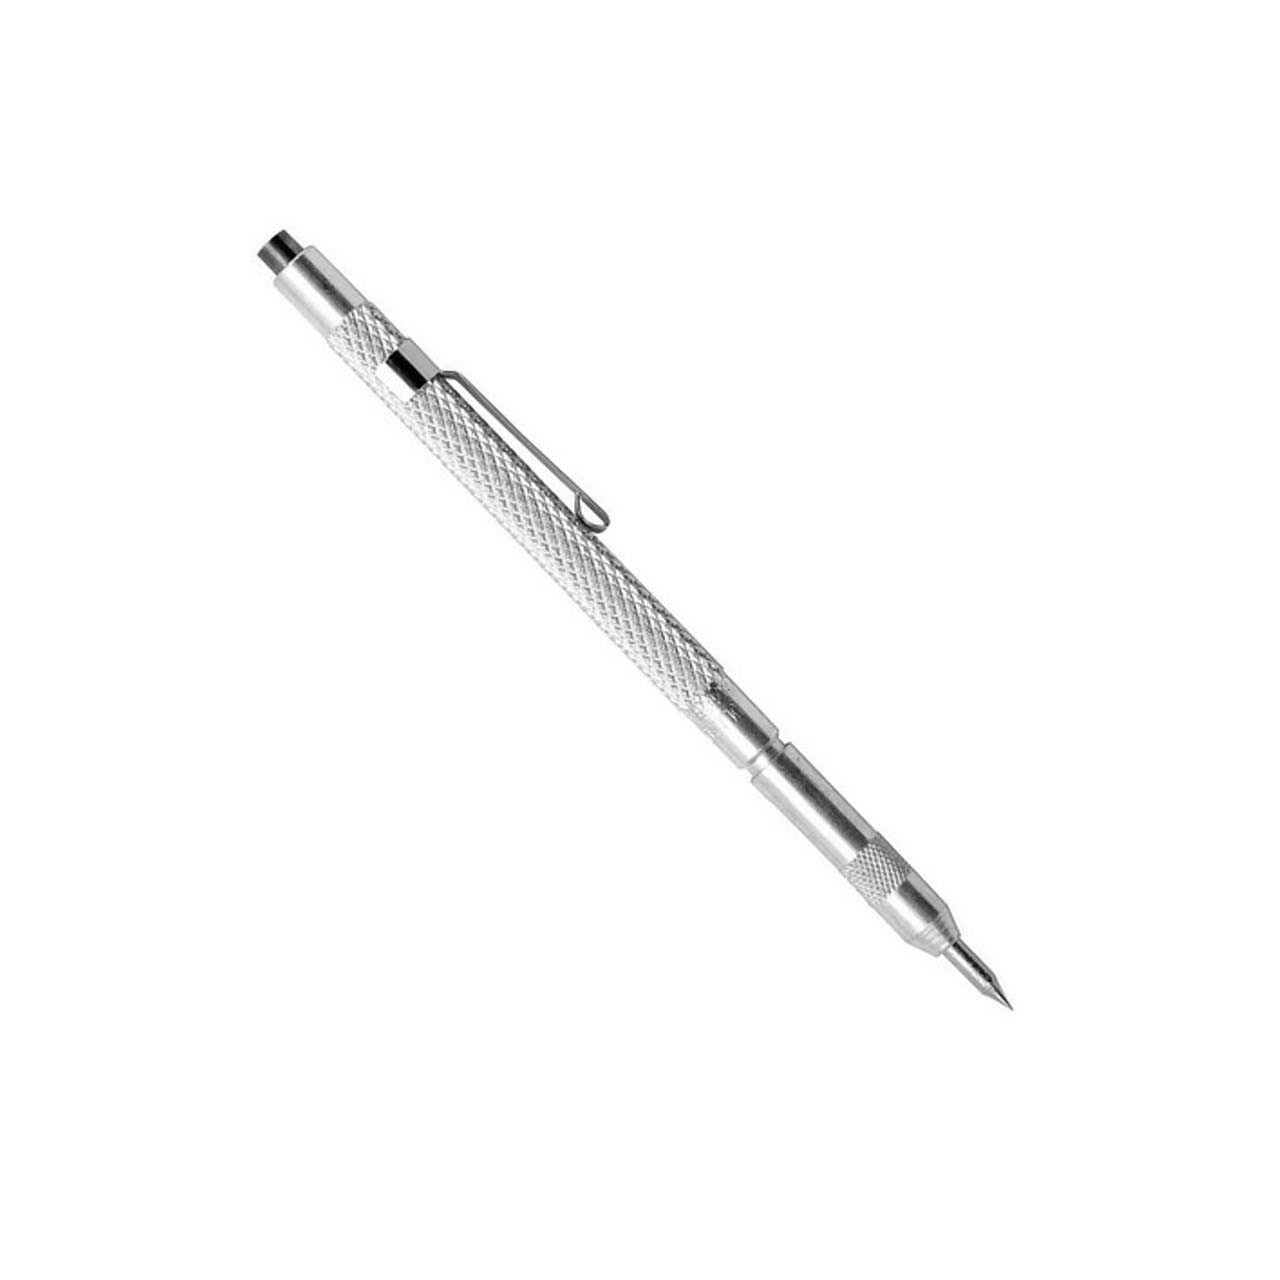 Scriber Tungsten Carbide Tip Scribe Marking Etching Pen General Tool 88